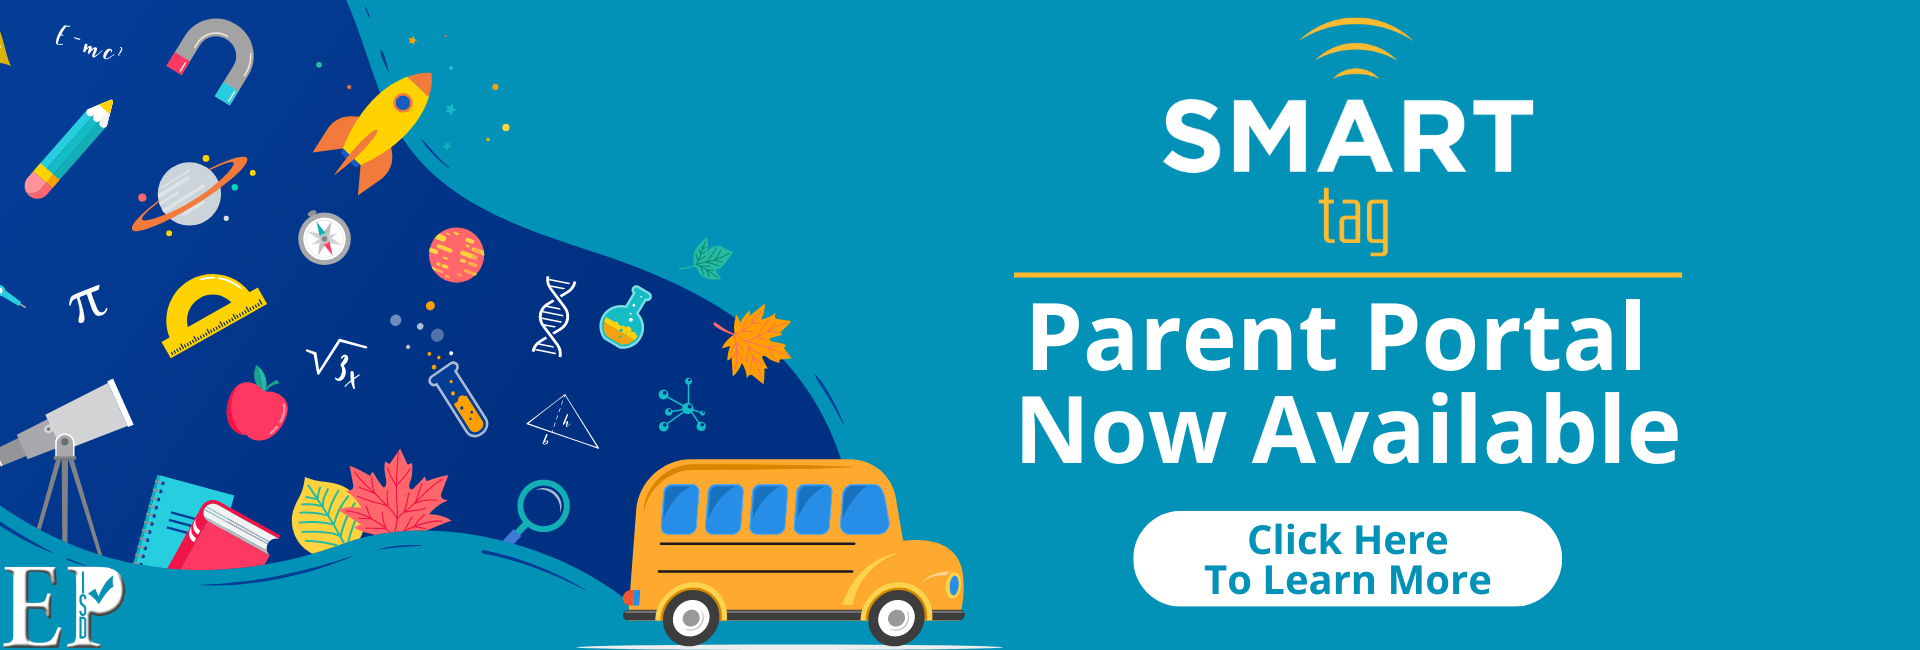 SMART Tag parent portal banner